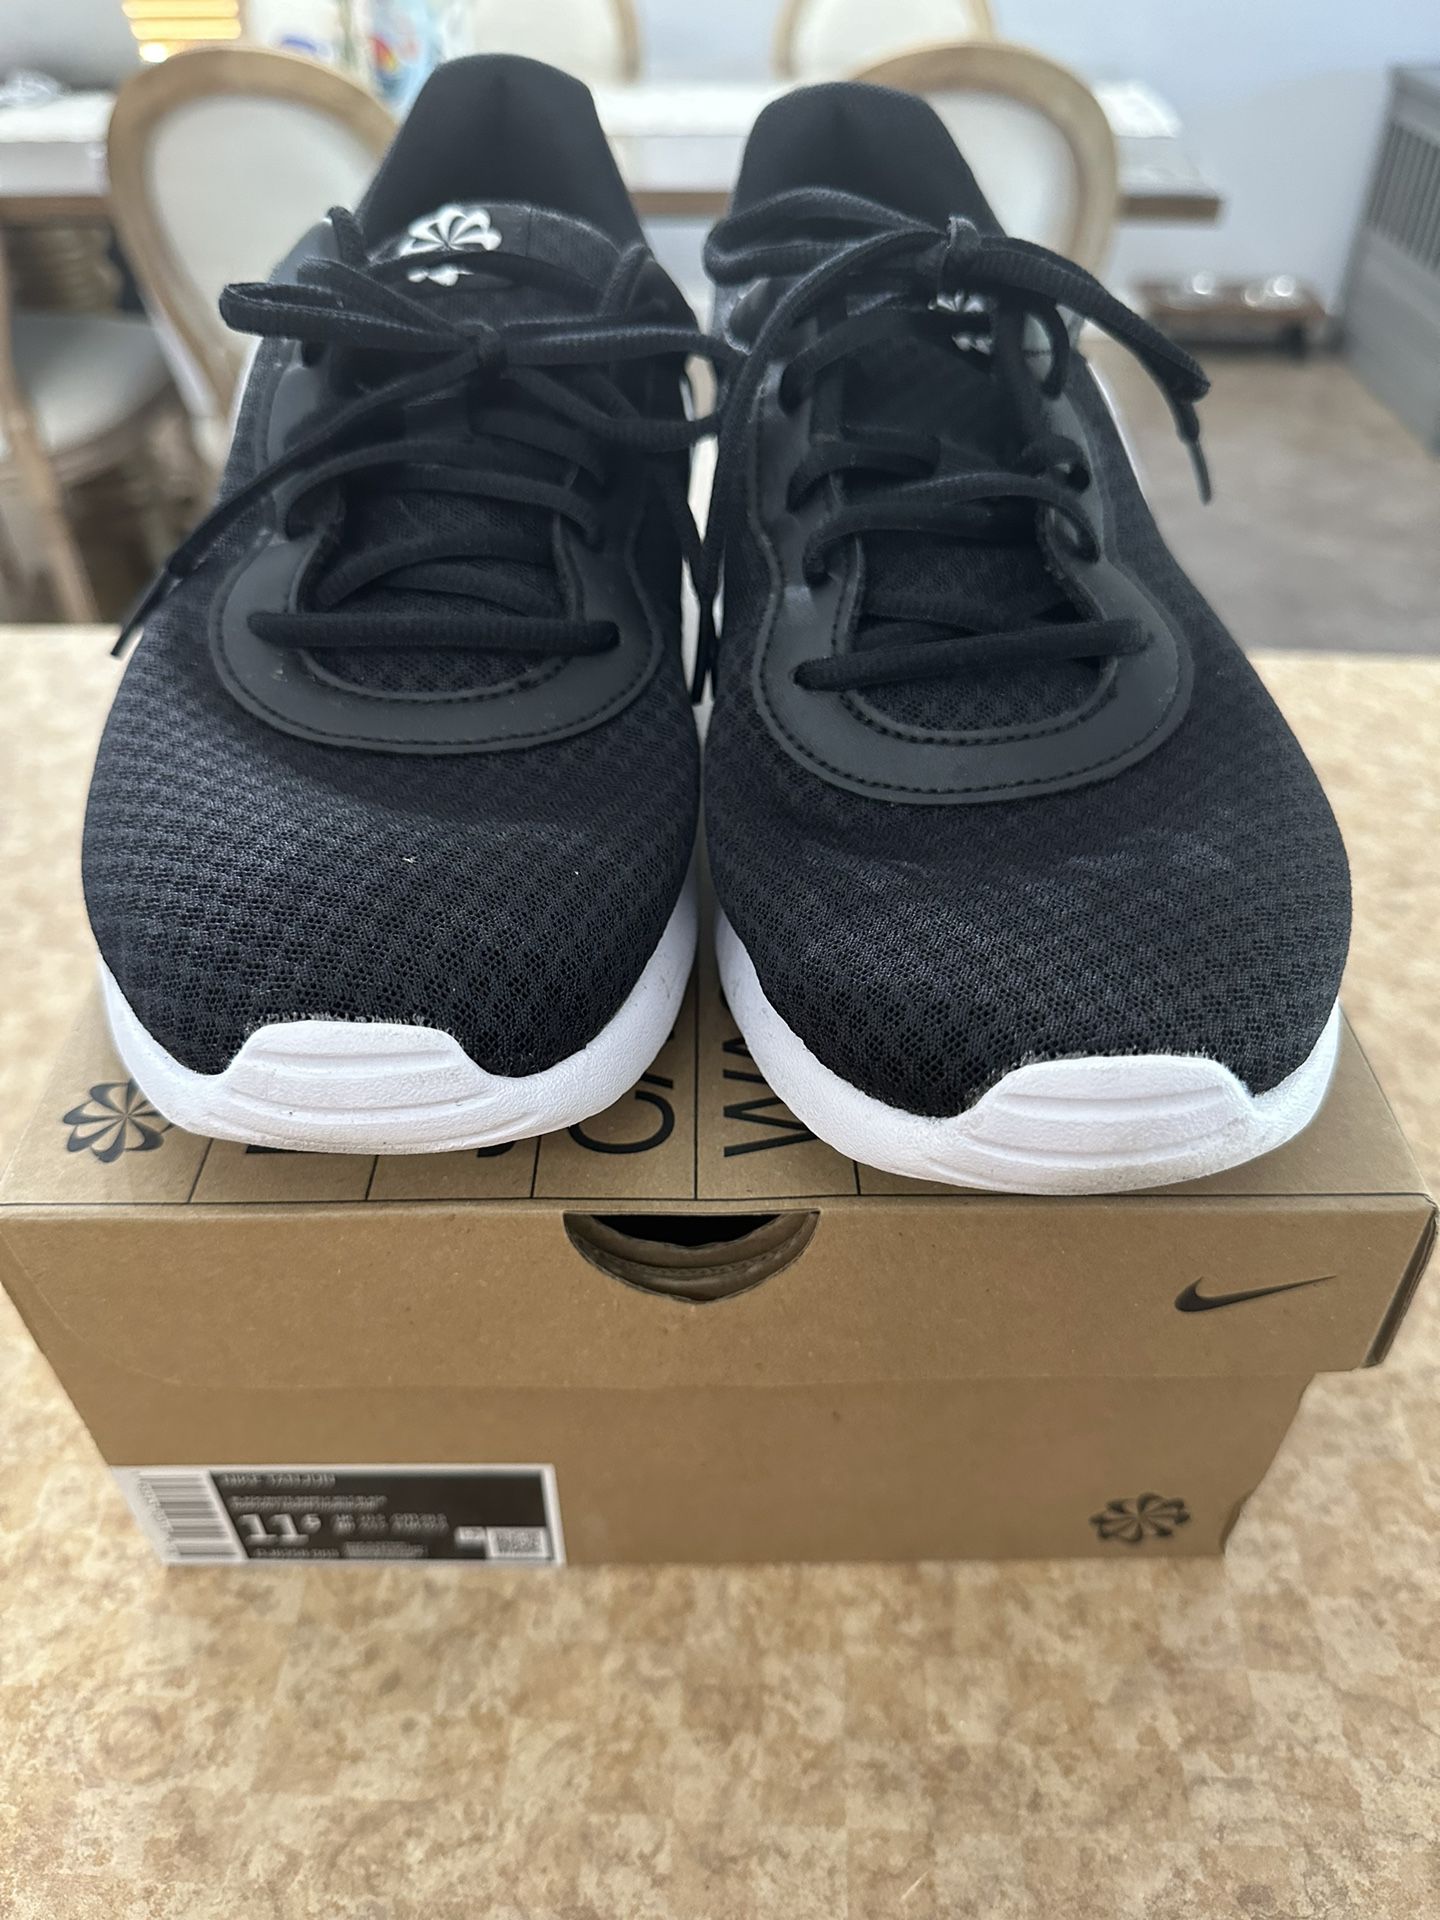 Nike Men’s Tanjun Size 11.5